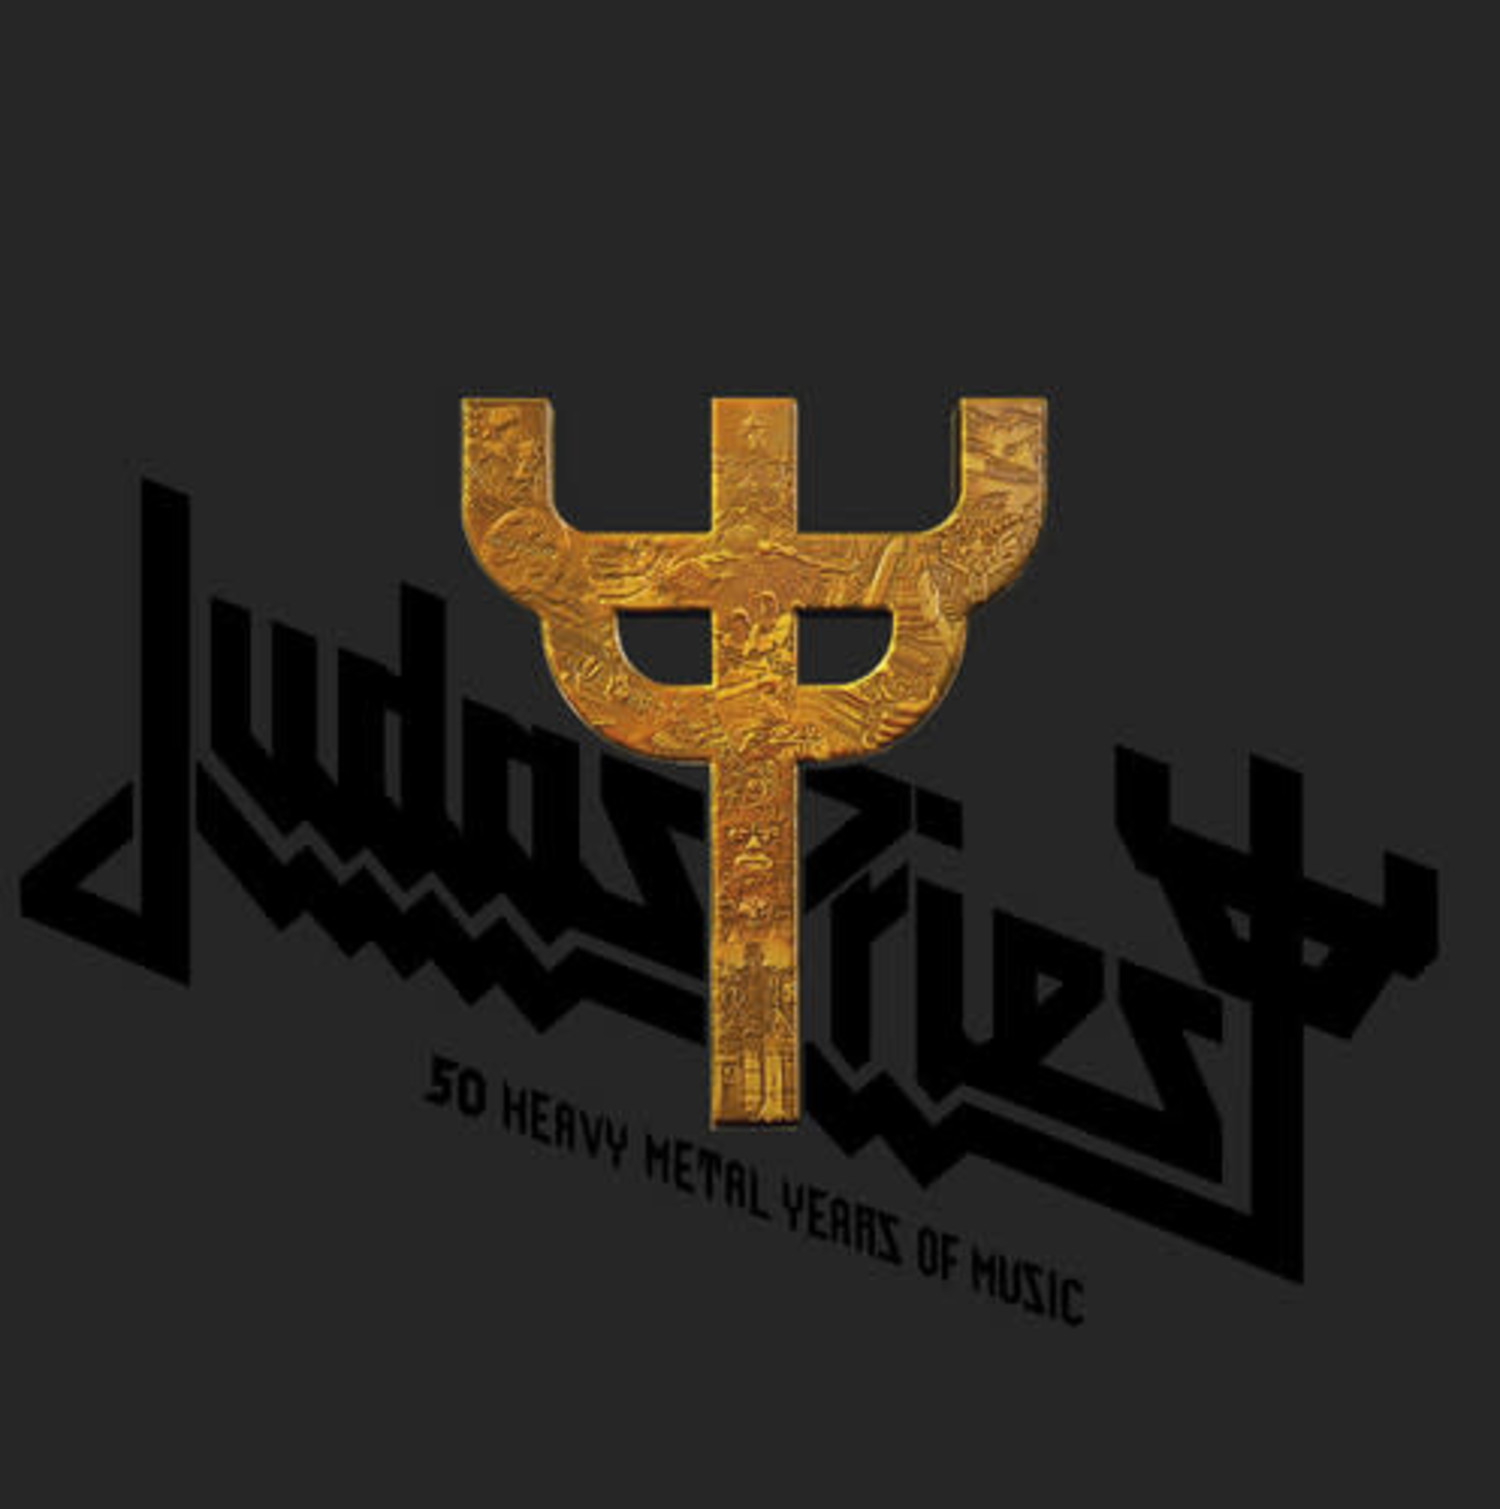 Judas Priest CD Collection Album Ram It Down Genre Rock Heavy Metal Gifts  Vintage Music English Heavy Metal Band -  Finland